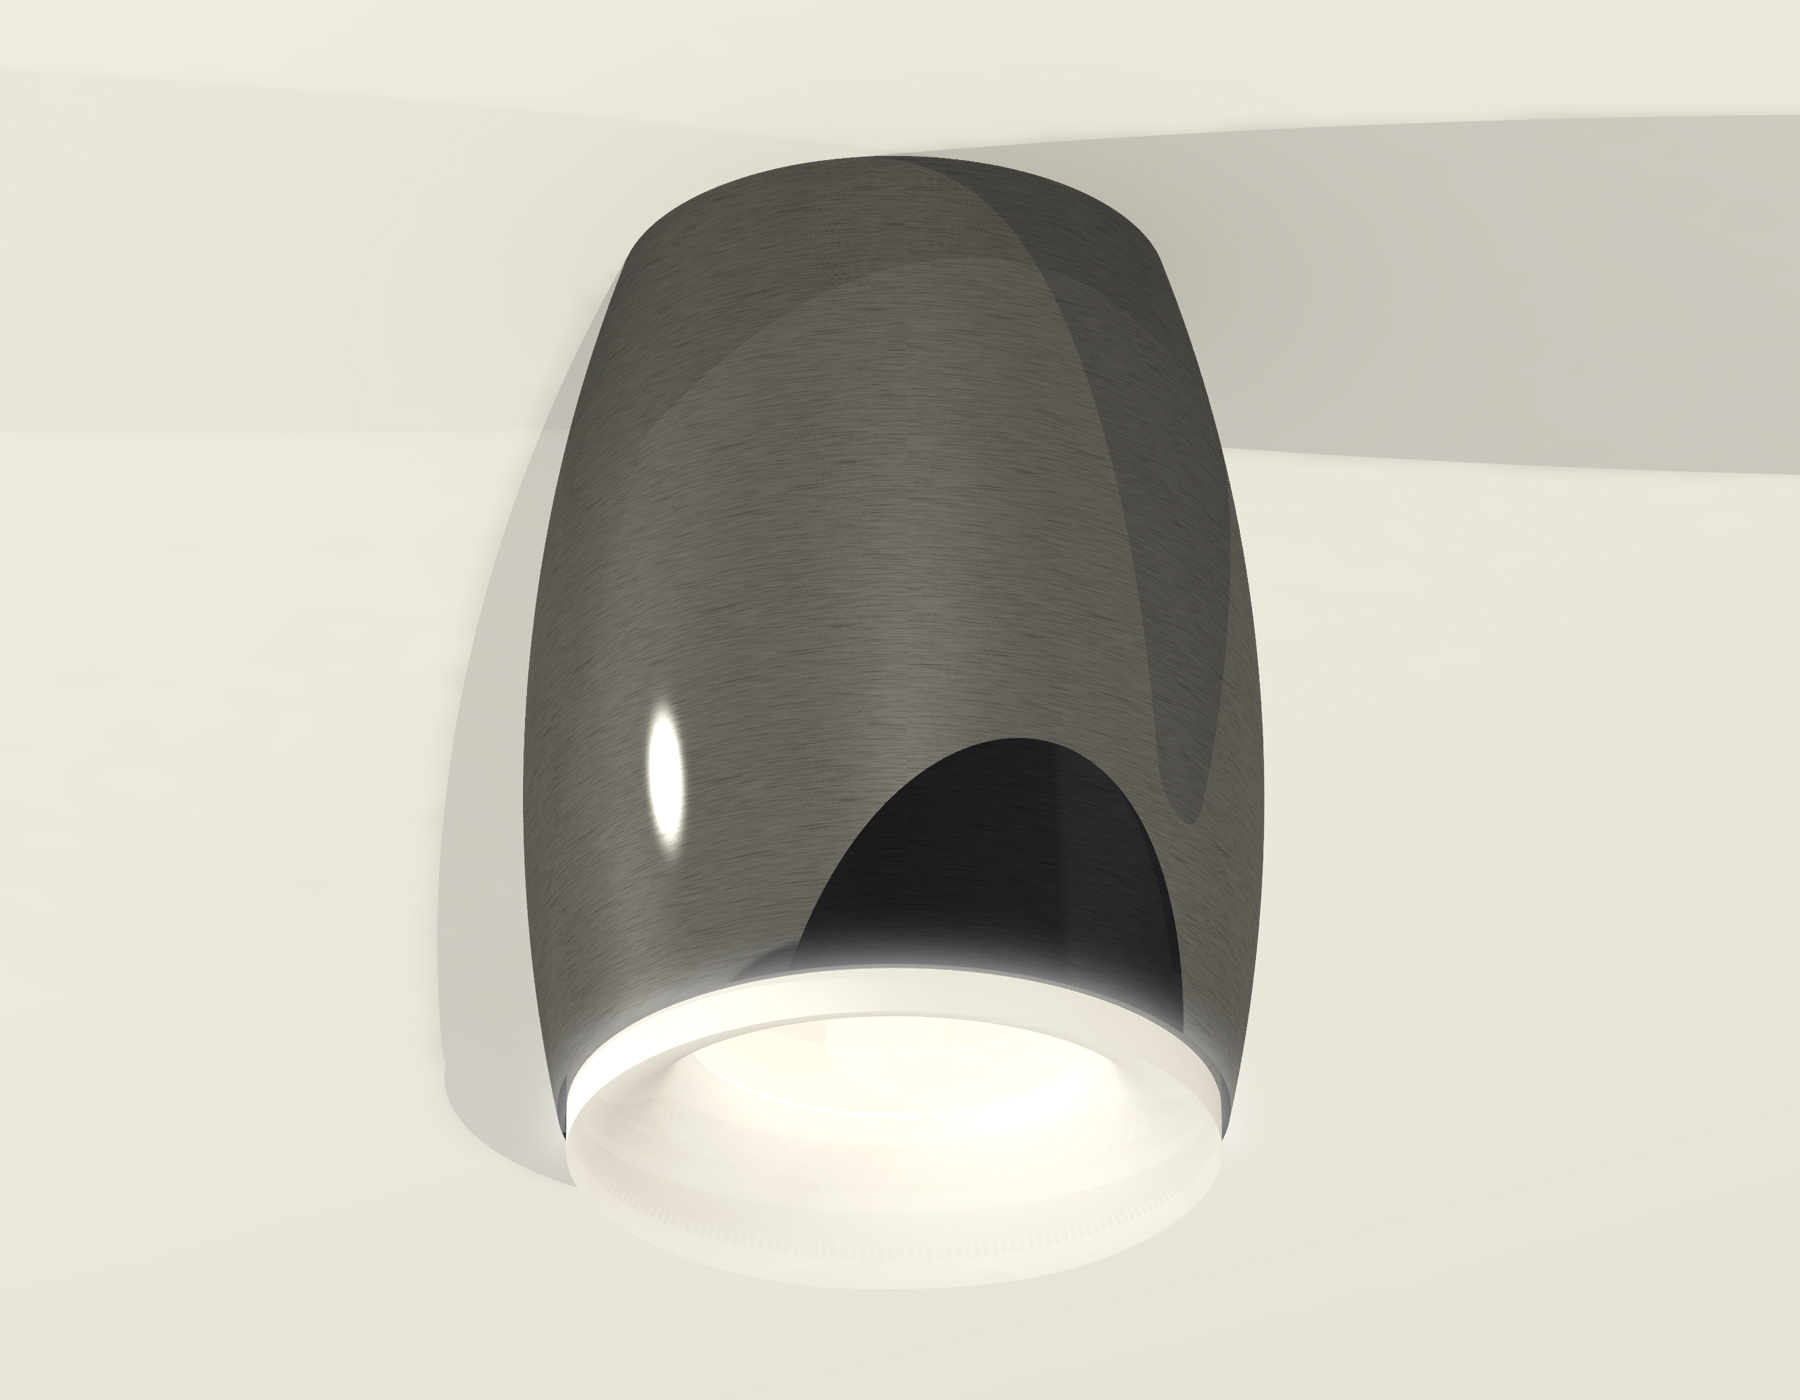 Накладной светильник Ambrella Light Techno XS1123021 (C1123, N7165)